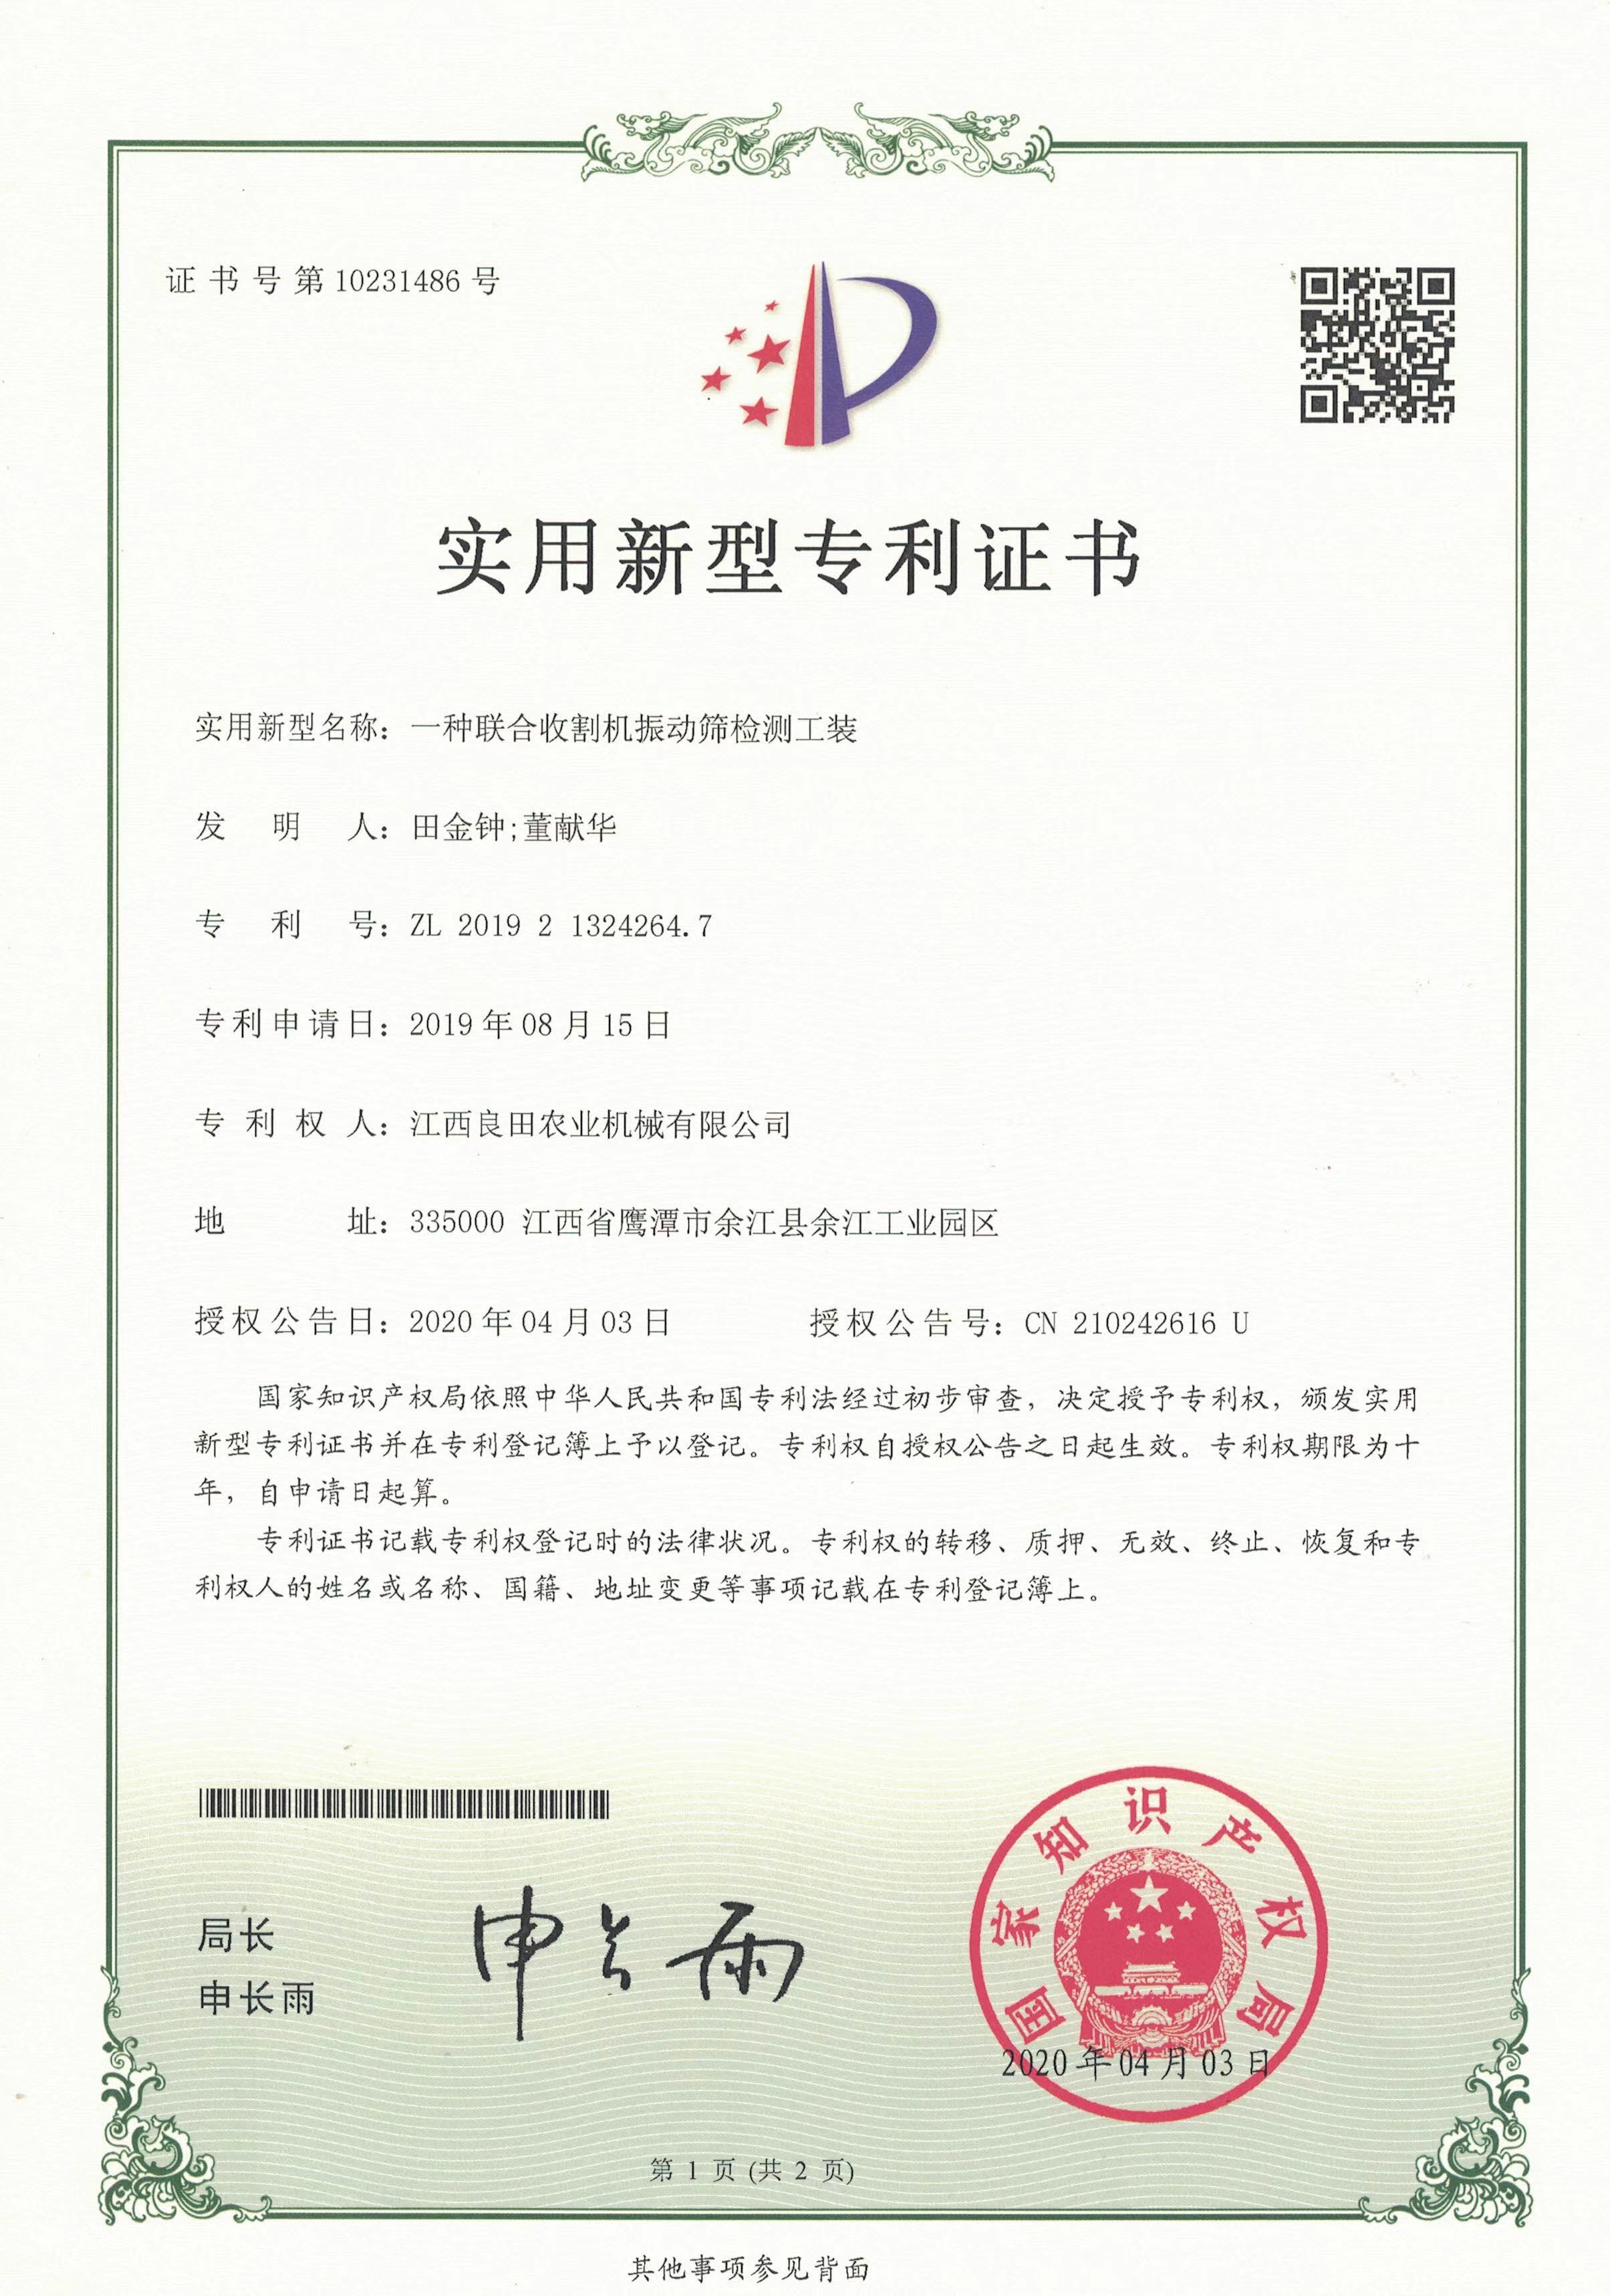 Wuhan Wubota Machinery Co., Ltd. Certifications